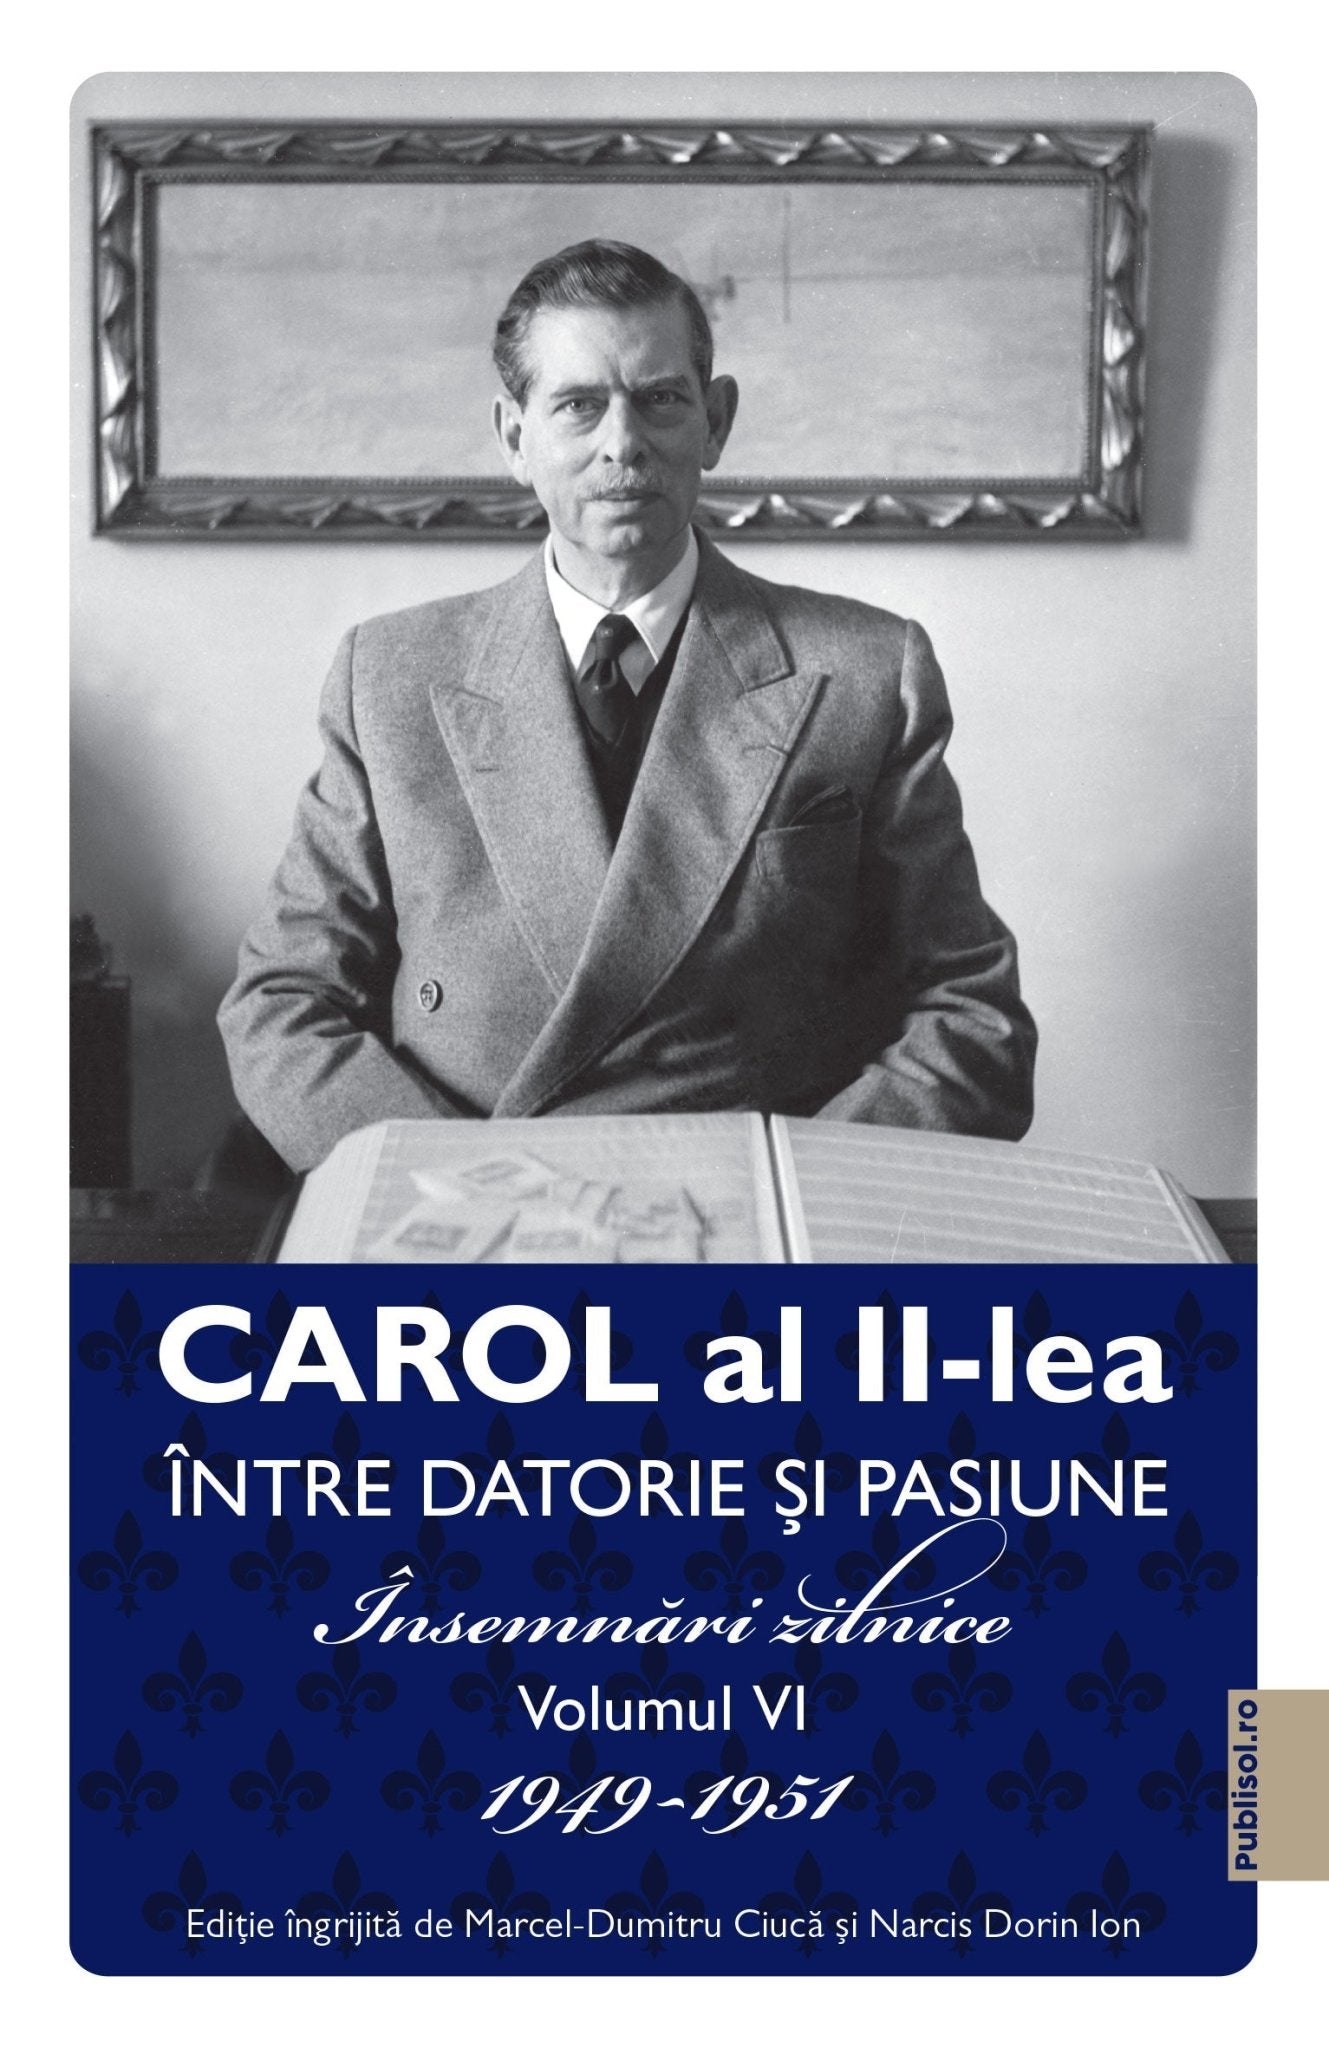 Pachet complet Carol al II-lea - 6 VOLUME - Ed. digitala - PDF - Publisol.ro